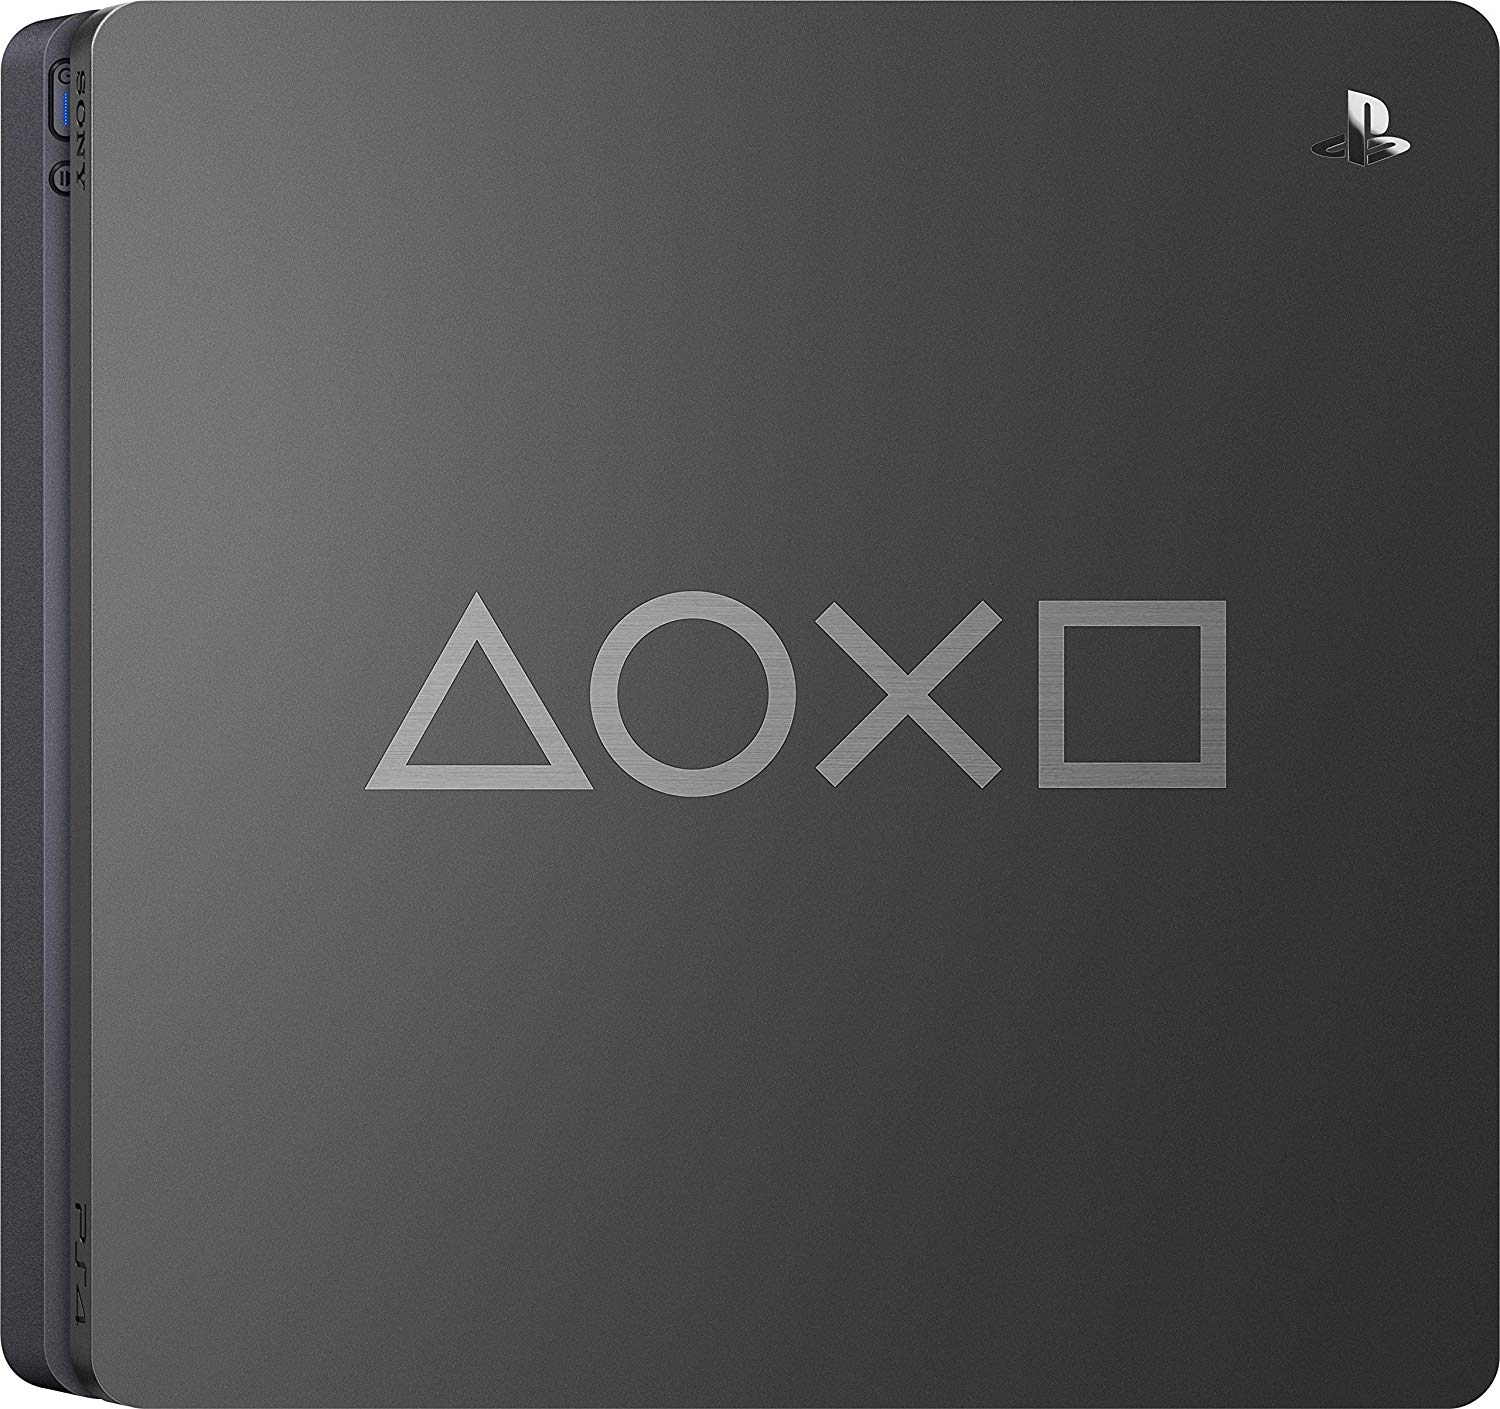 PlayStation 4 Slim 500GB Days of Play Limited Edition 